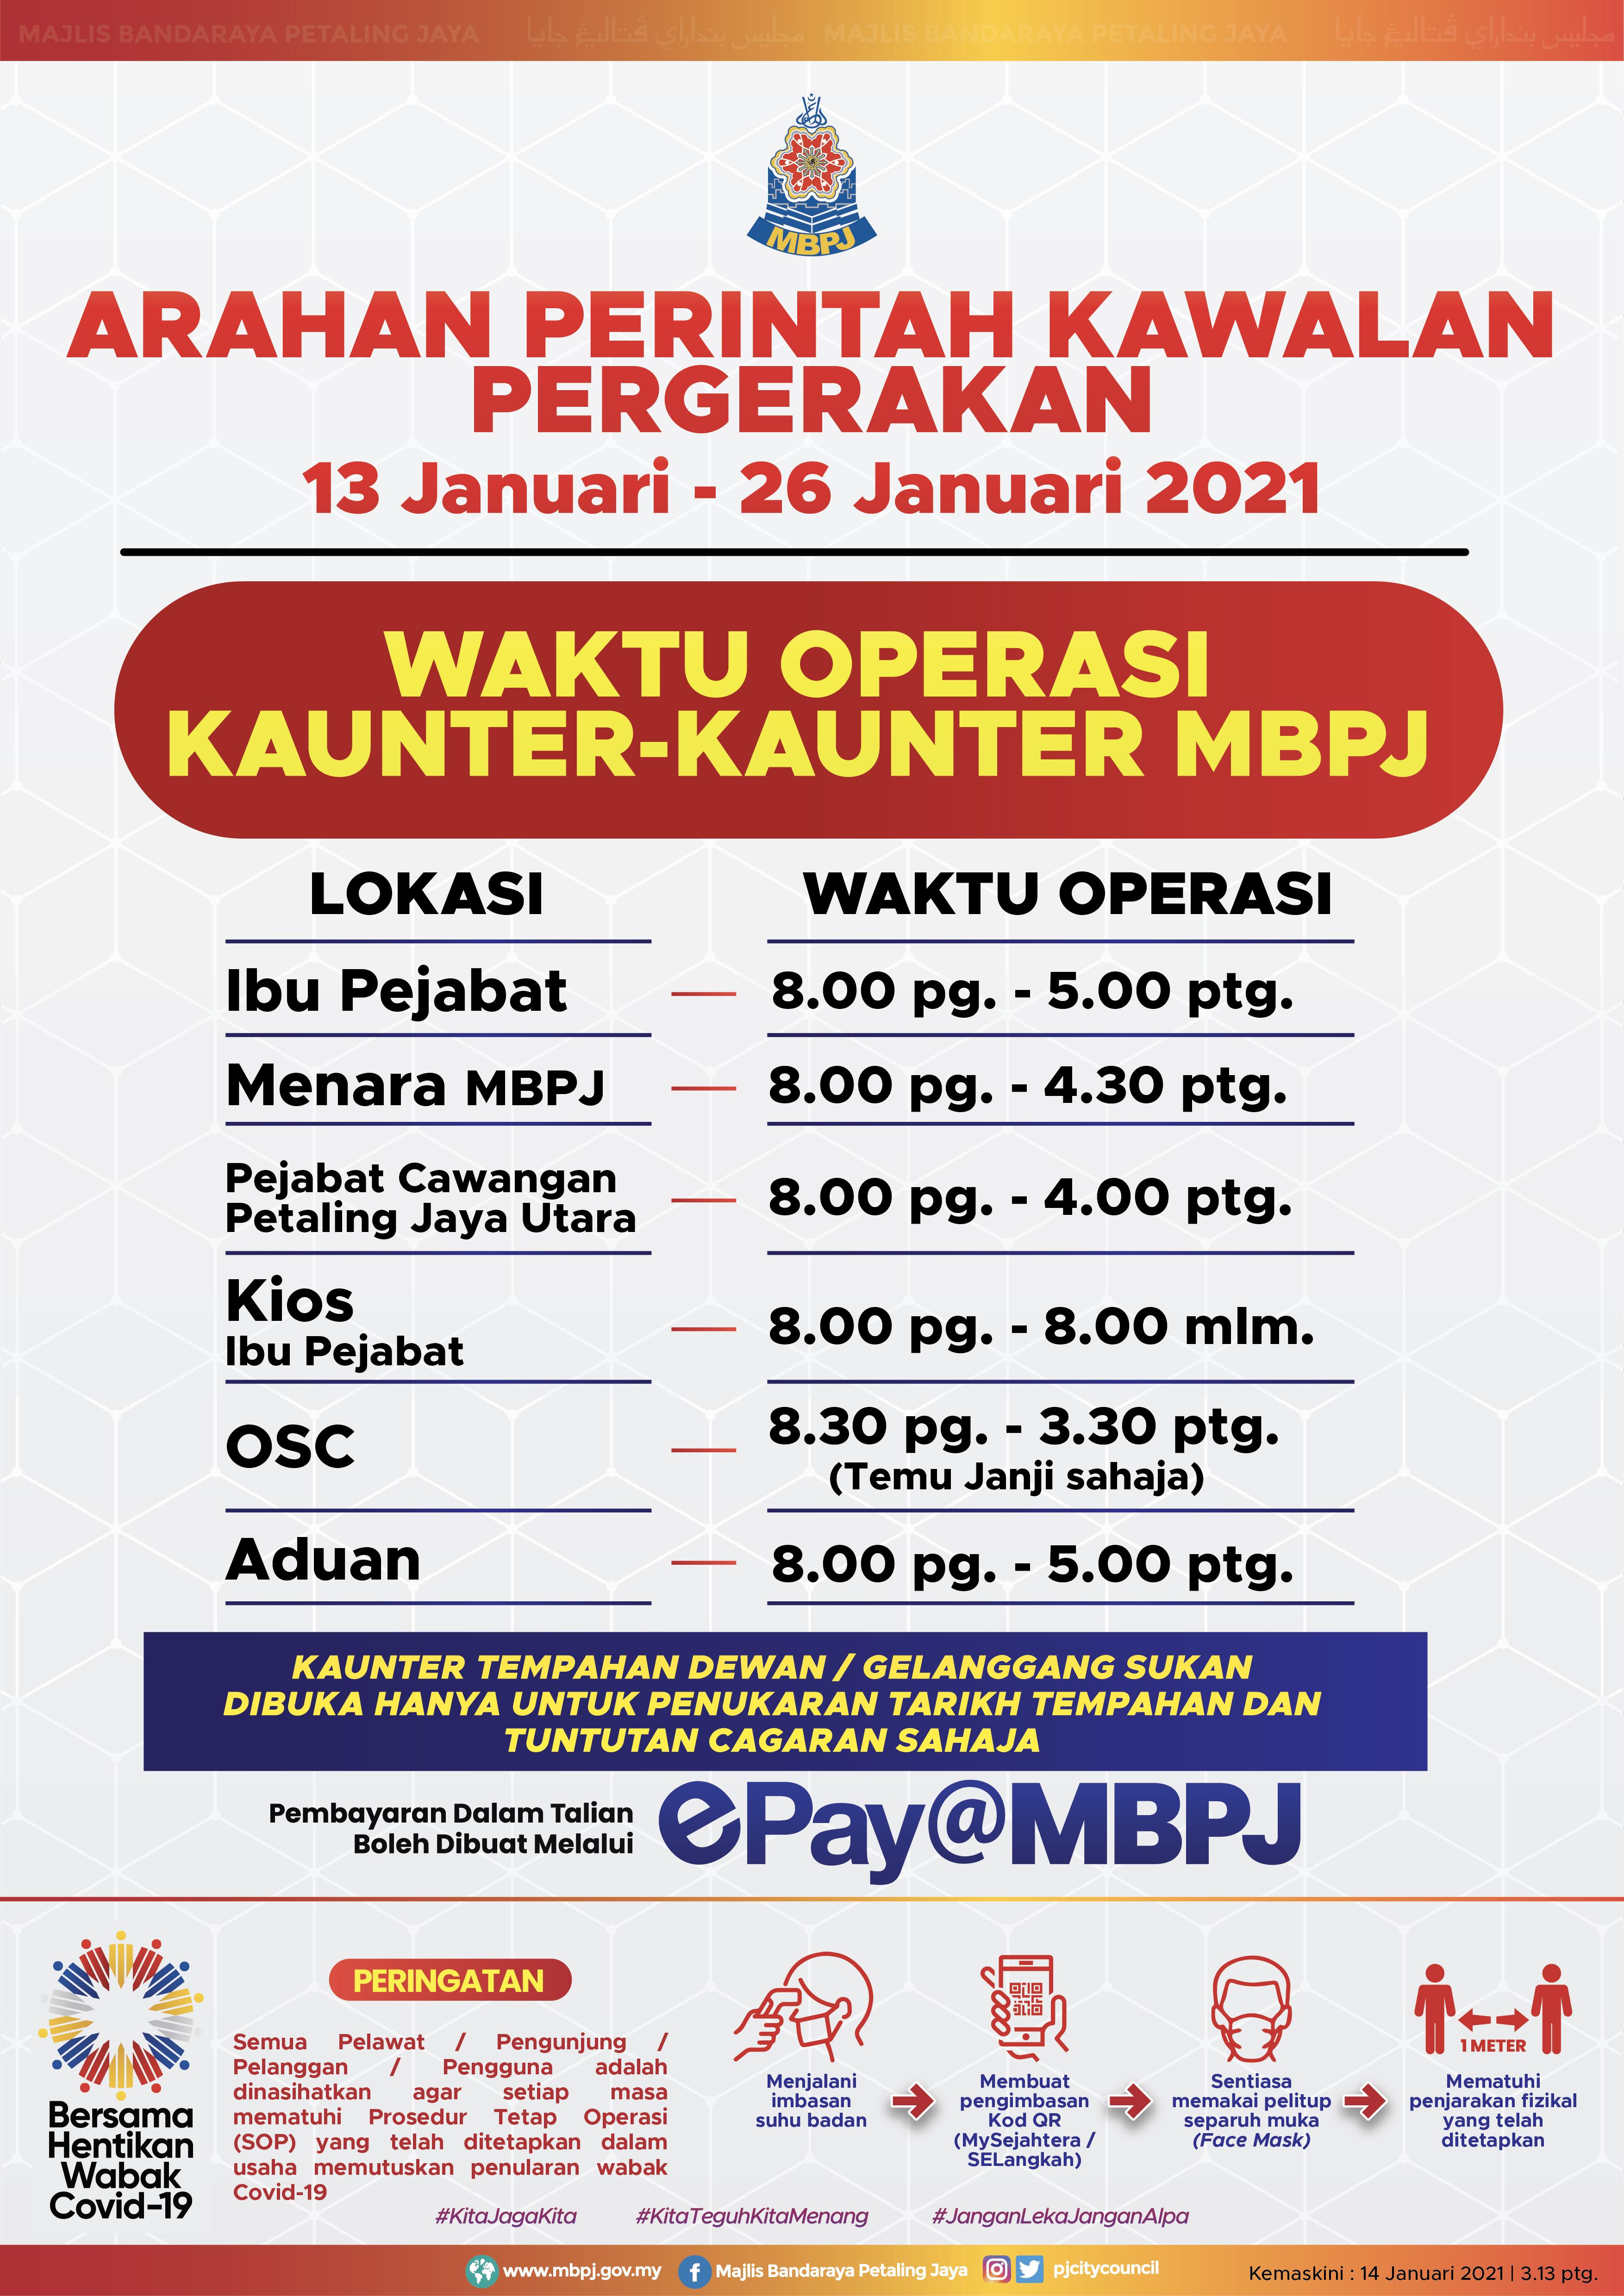 Parking hours mbpj Bentonsan Park: